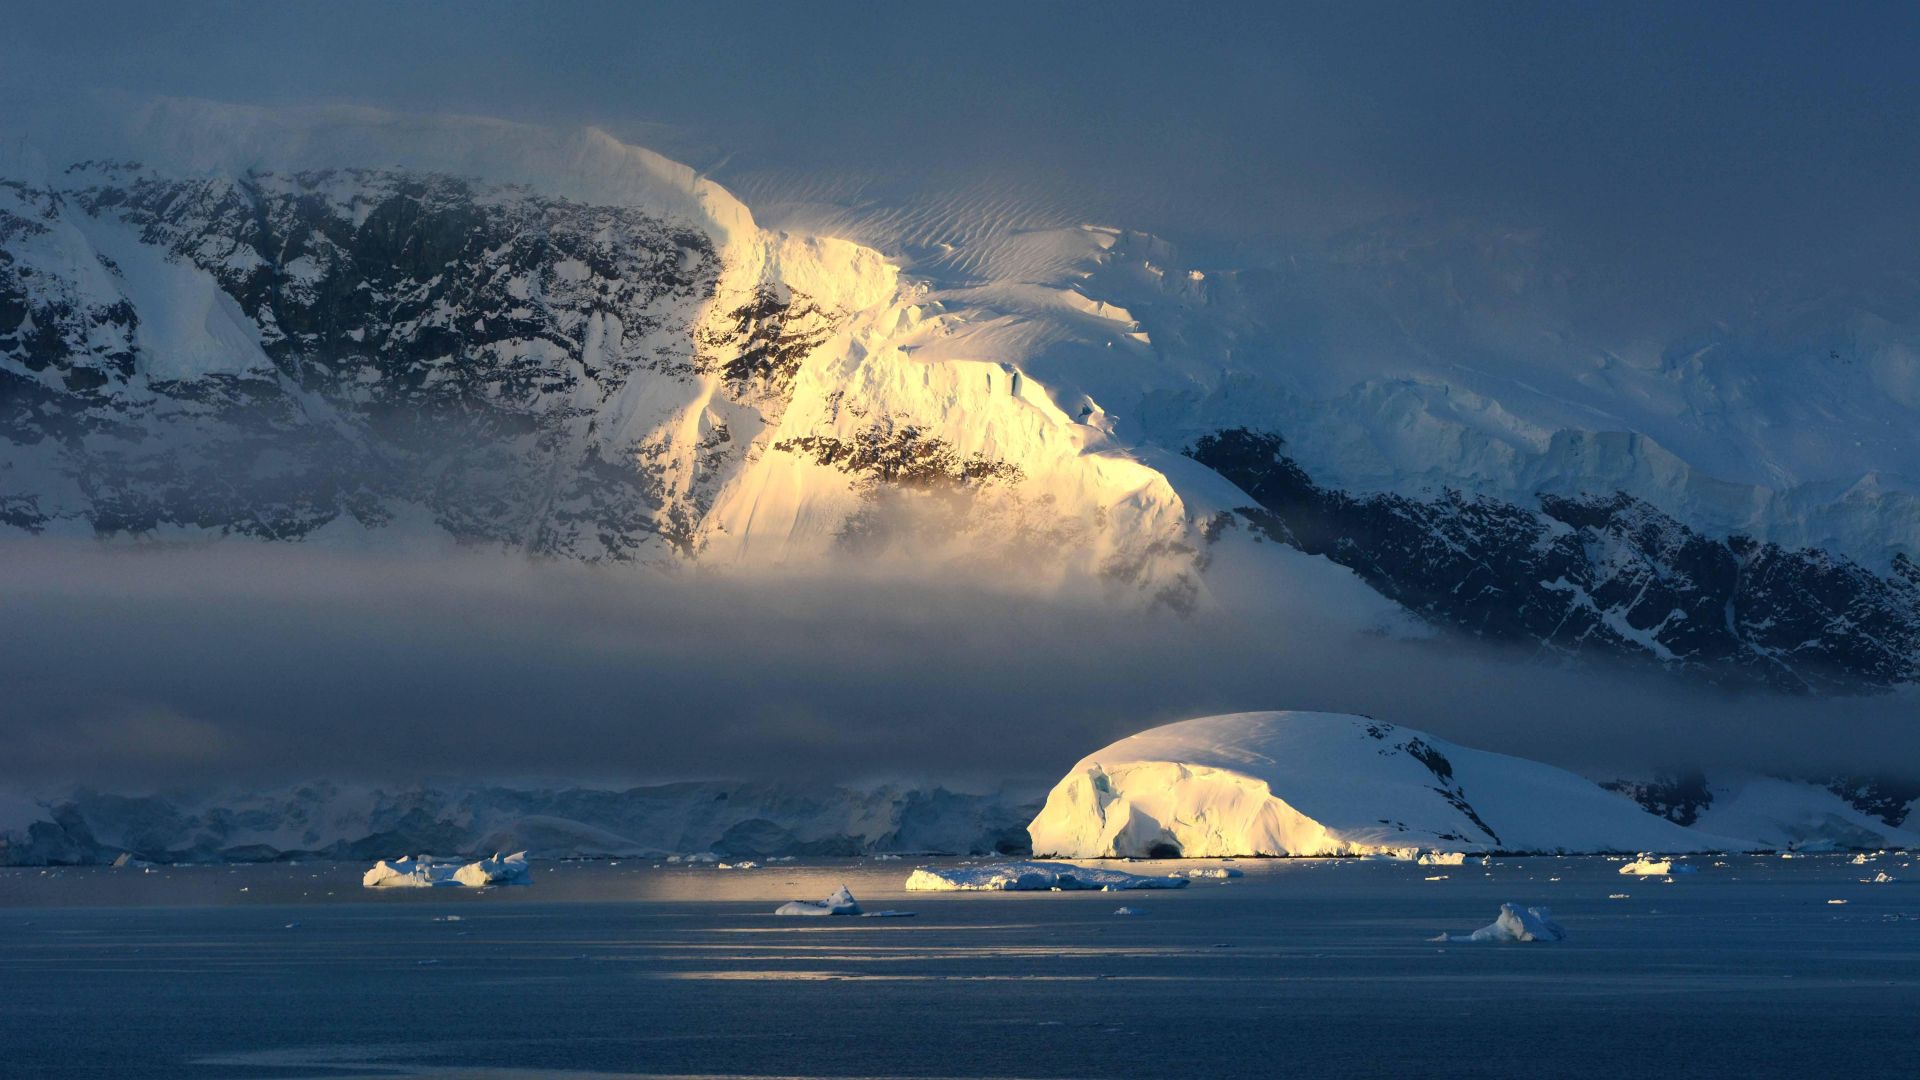 Antarctica, 4k, 5k wallpaper, 8k wallpaper, hd wallpaper, snow, iceberg, mountain (horizontal)